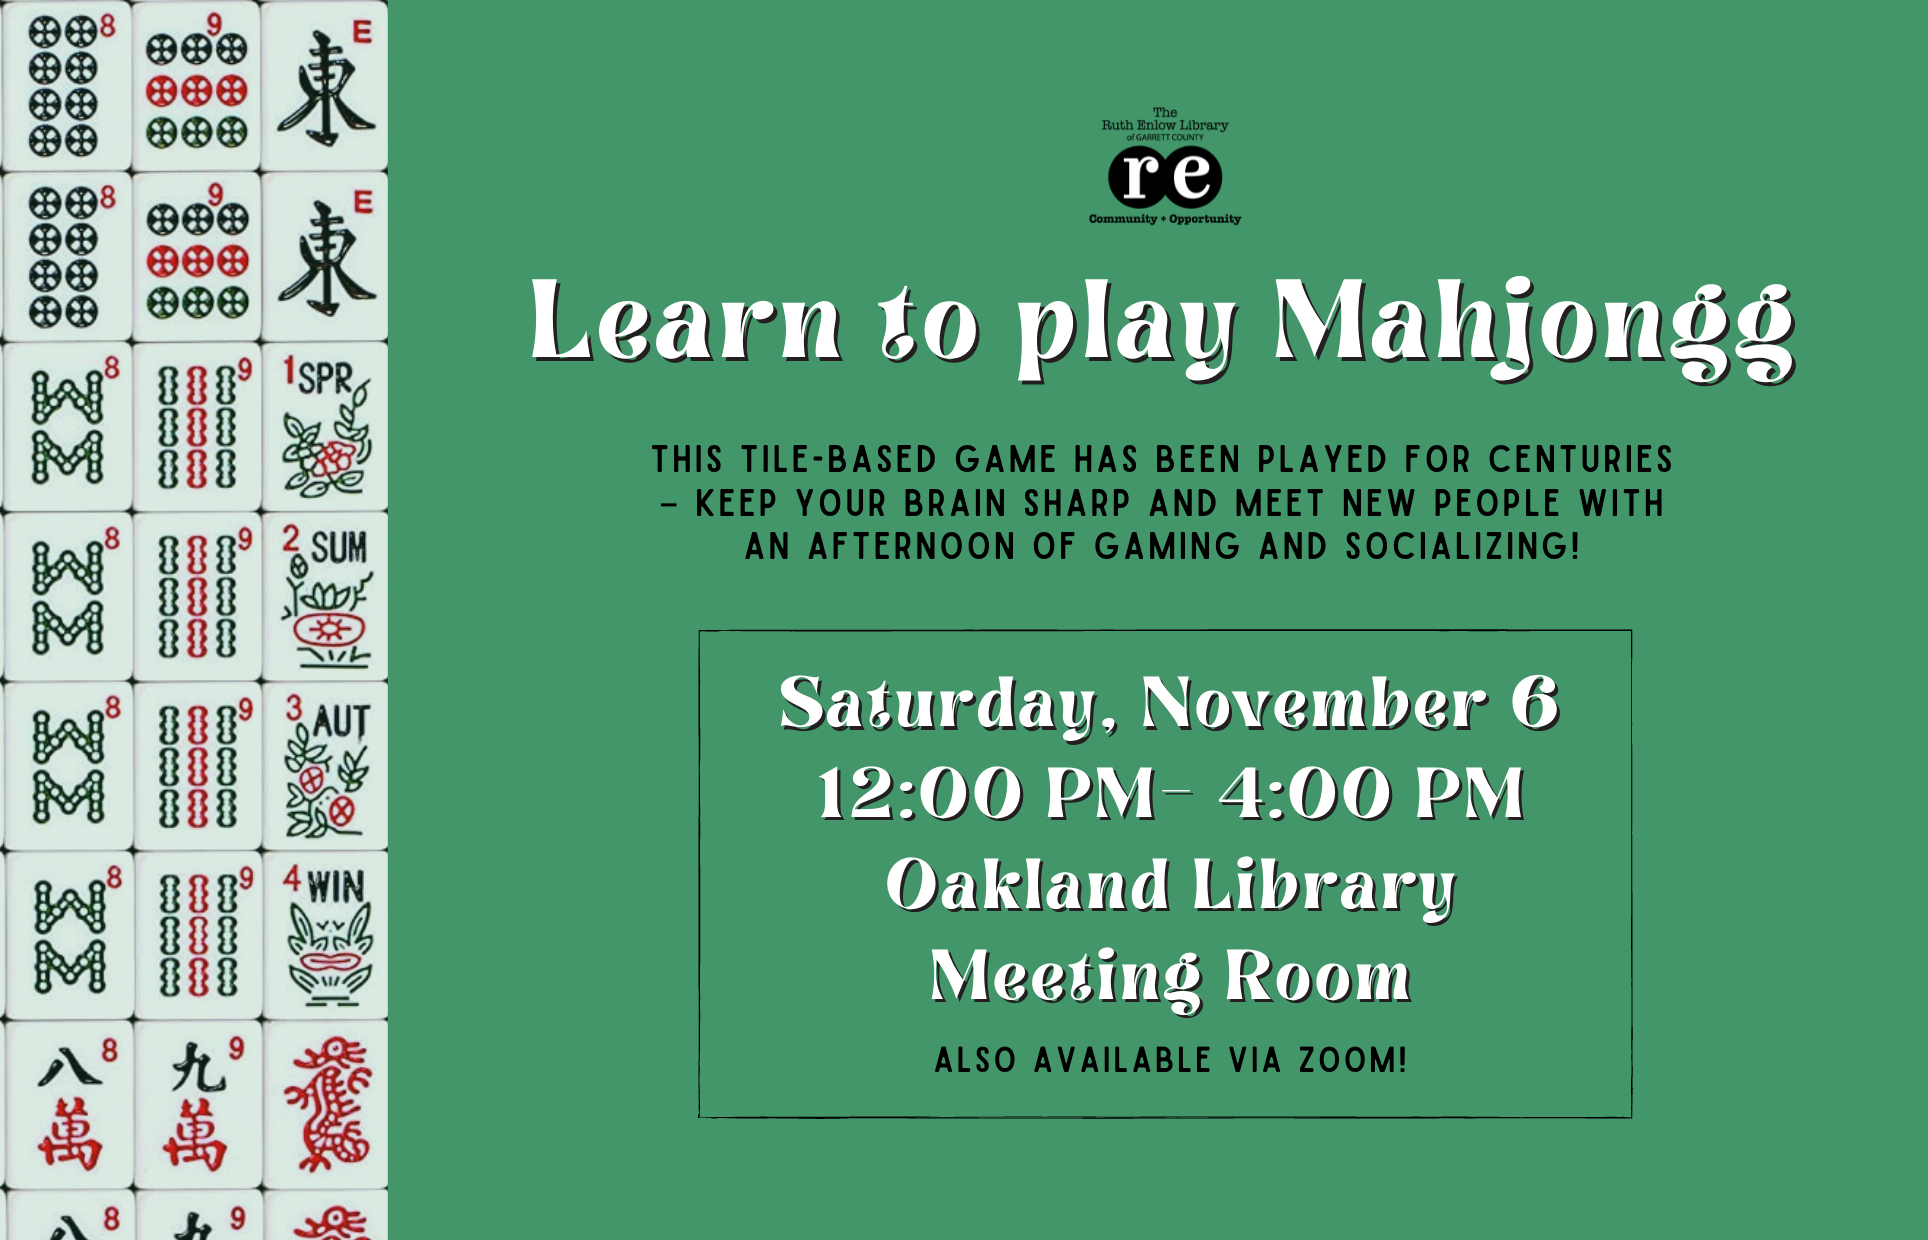 Learn to play Mahjongg